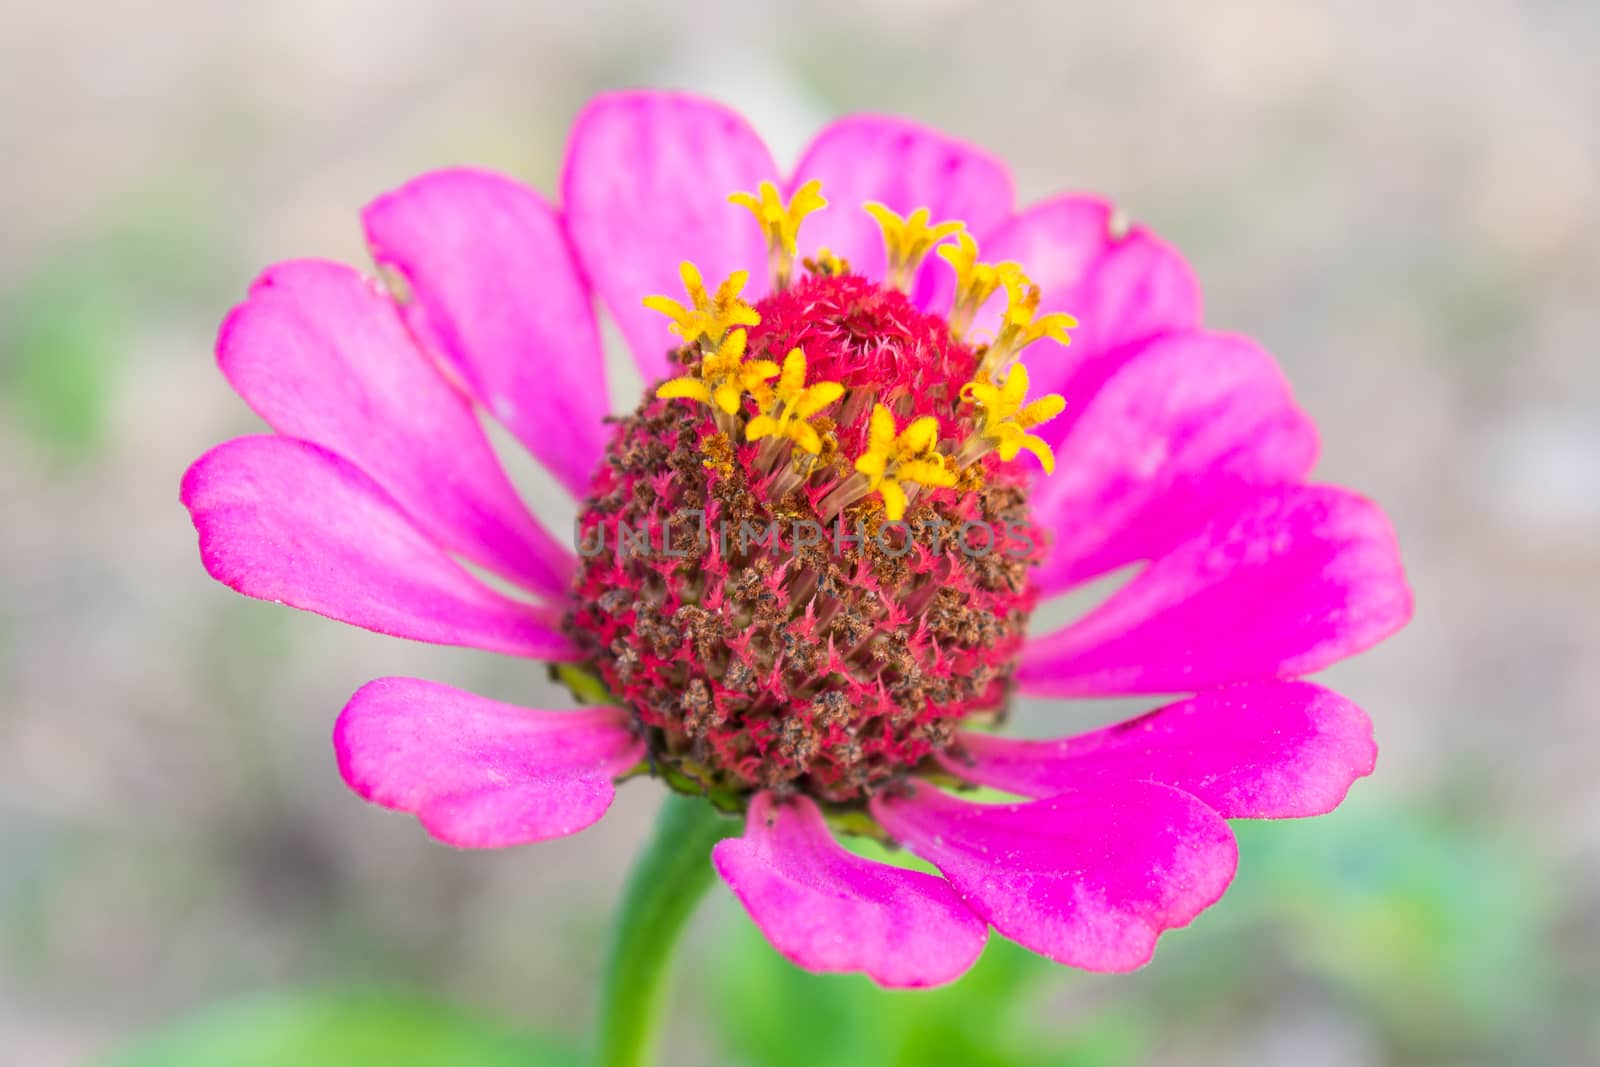 Pink Zinnia Flower at Center Closeup by steafpong